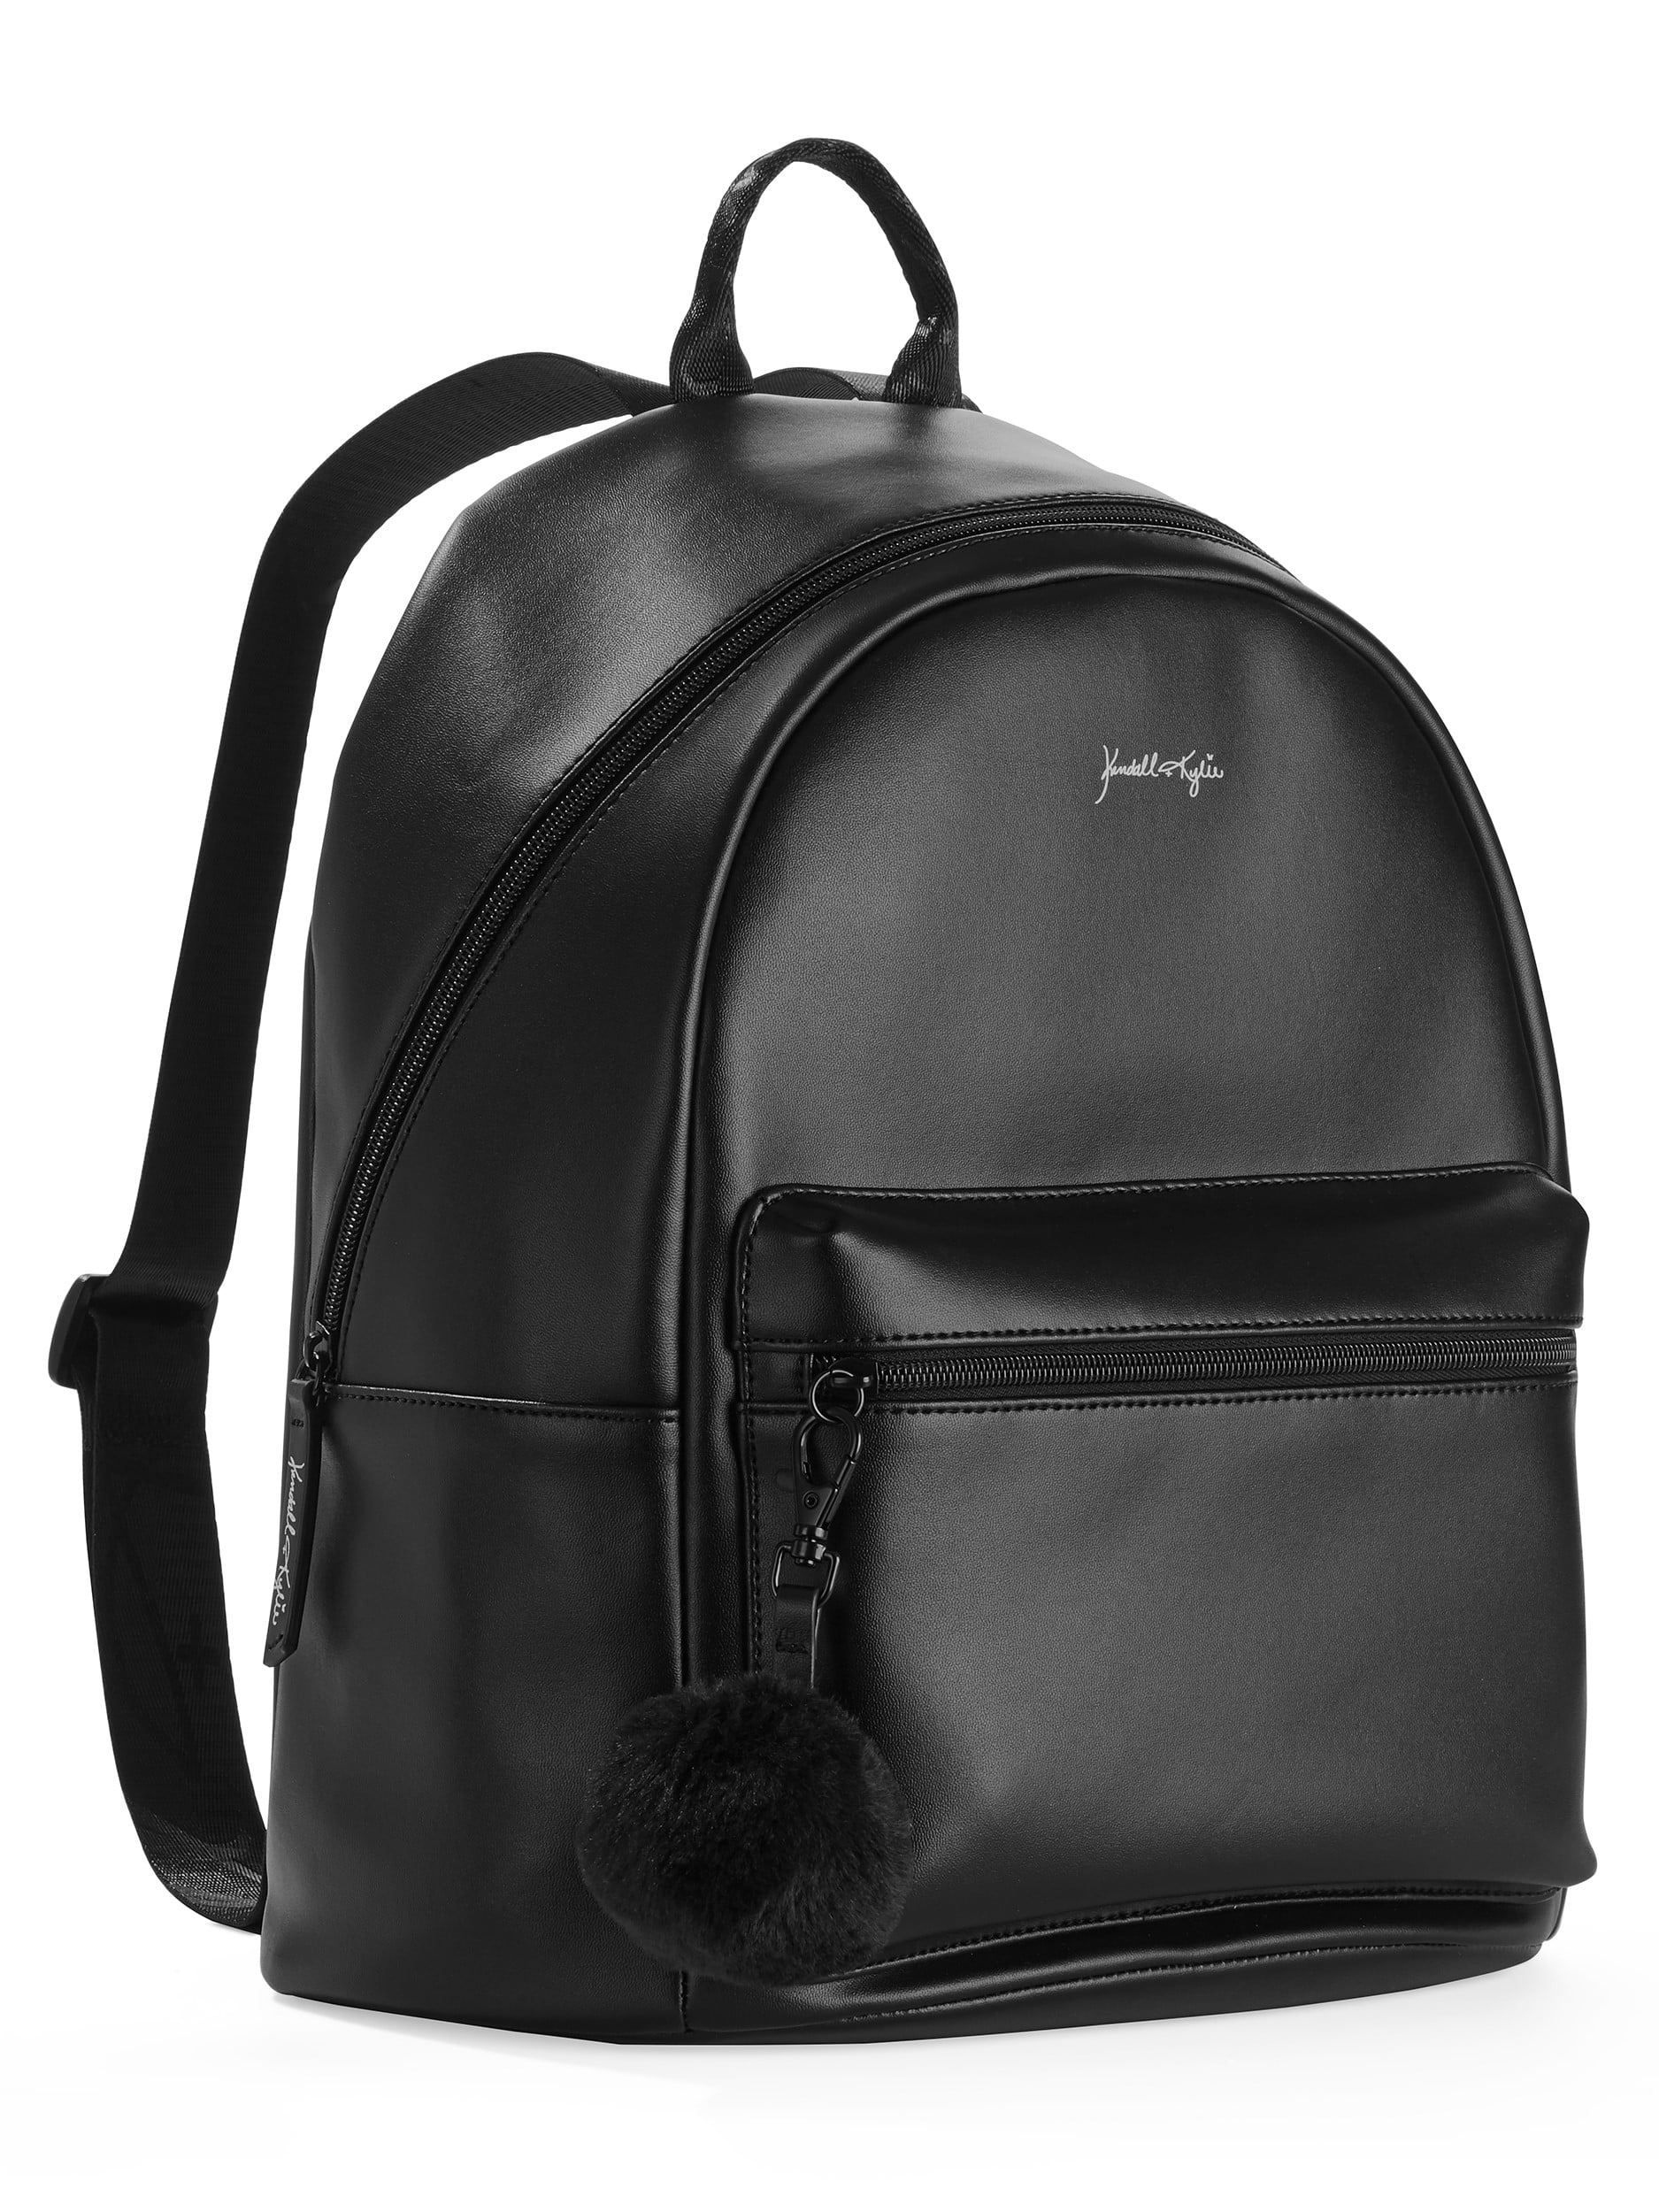 KENDALL+KYLIE 2Mini Backpacks/Purses CA56188 NEW w Tags 2 Bags